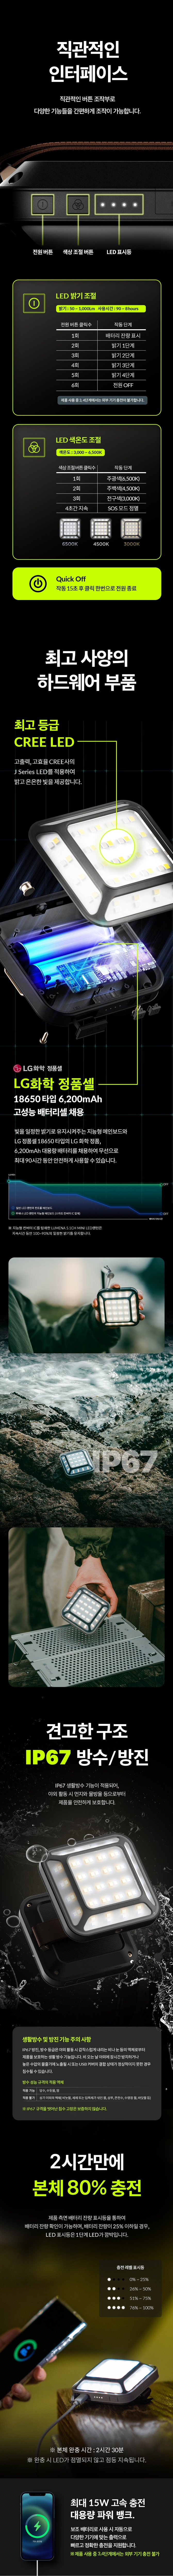 Lumena - N9 5.1CH MINI LED Light 行動電源照明LED燈｜露營燈｜聚光燈｜防水燈